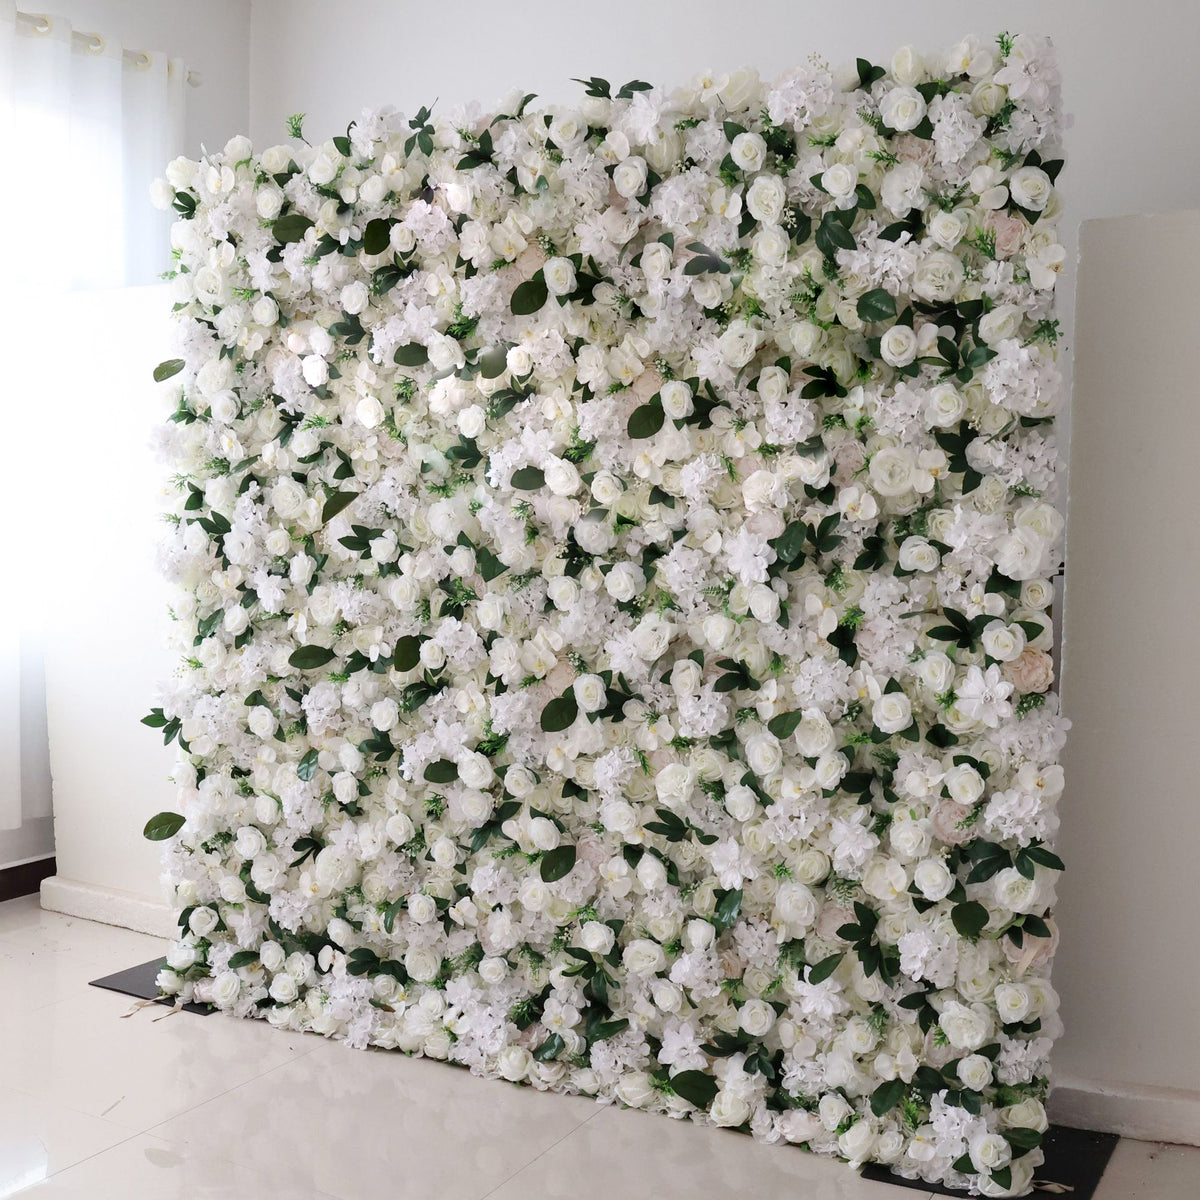 3D Artificial Flower Wall Arrangement Wedding Party Birthday Backdrop Decor HQ1309